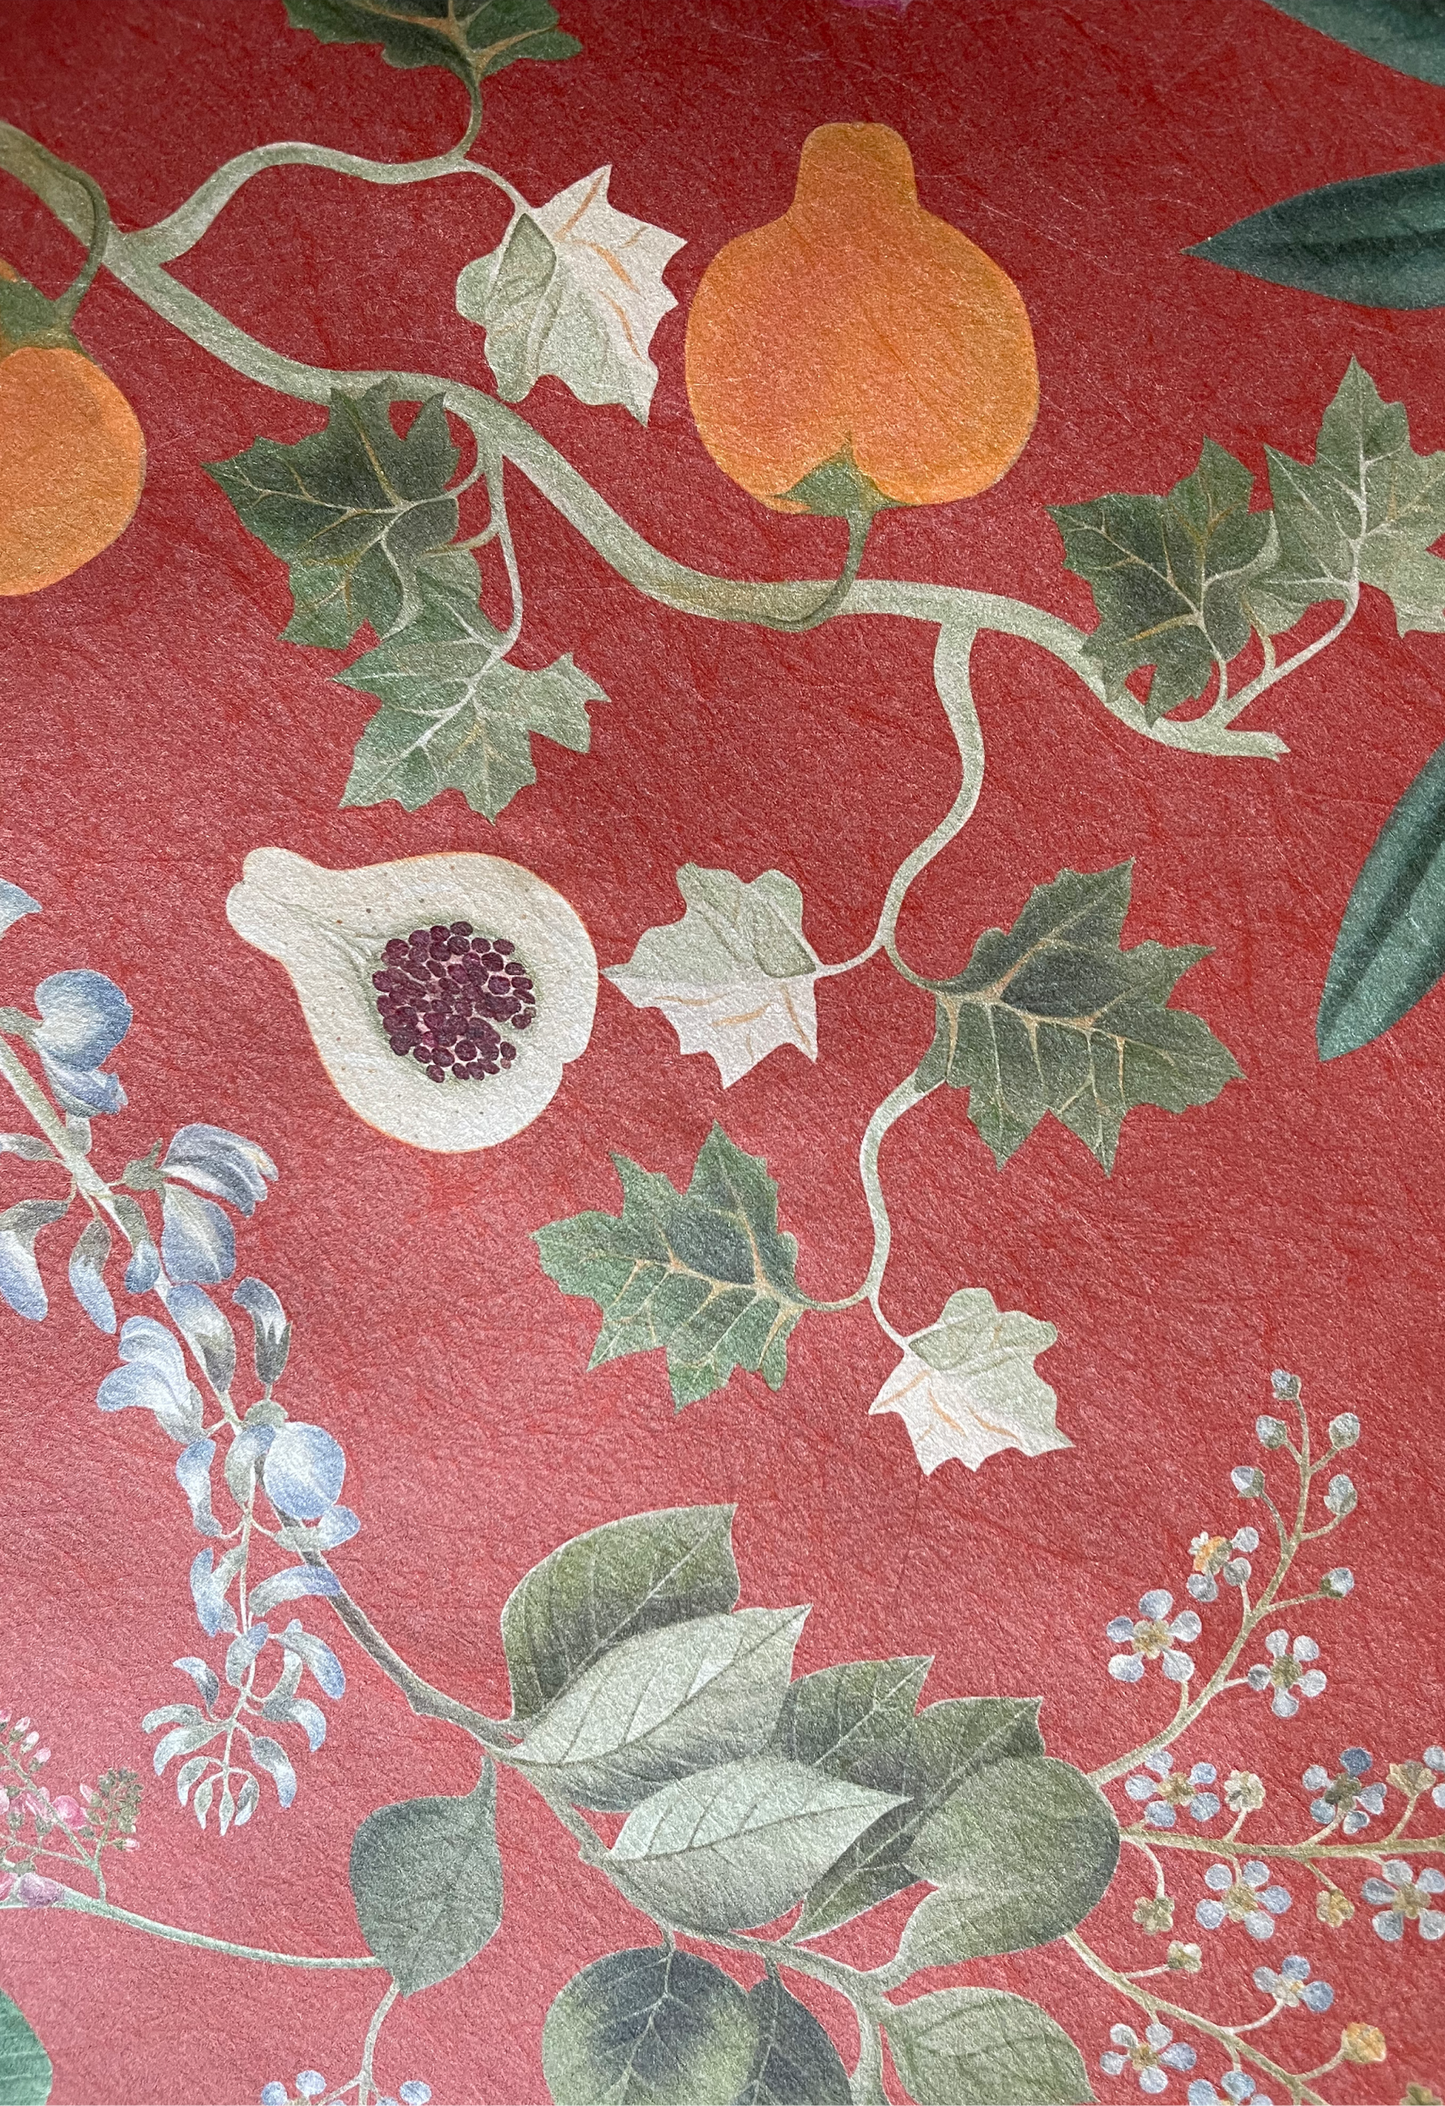 Deus ex Gardenia Eden Wallpaper in Marigold of orange fruit with leaves on a red background.